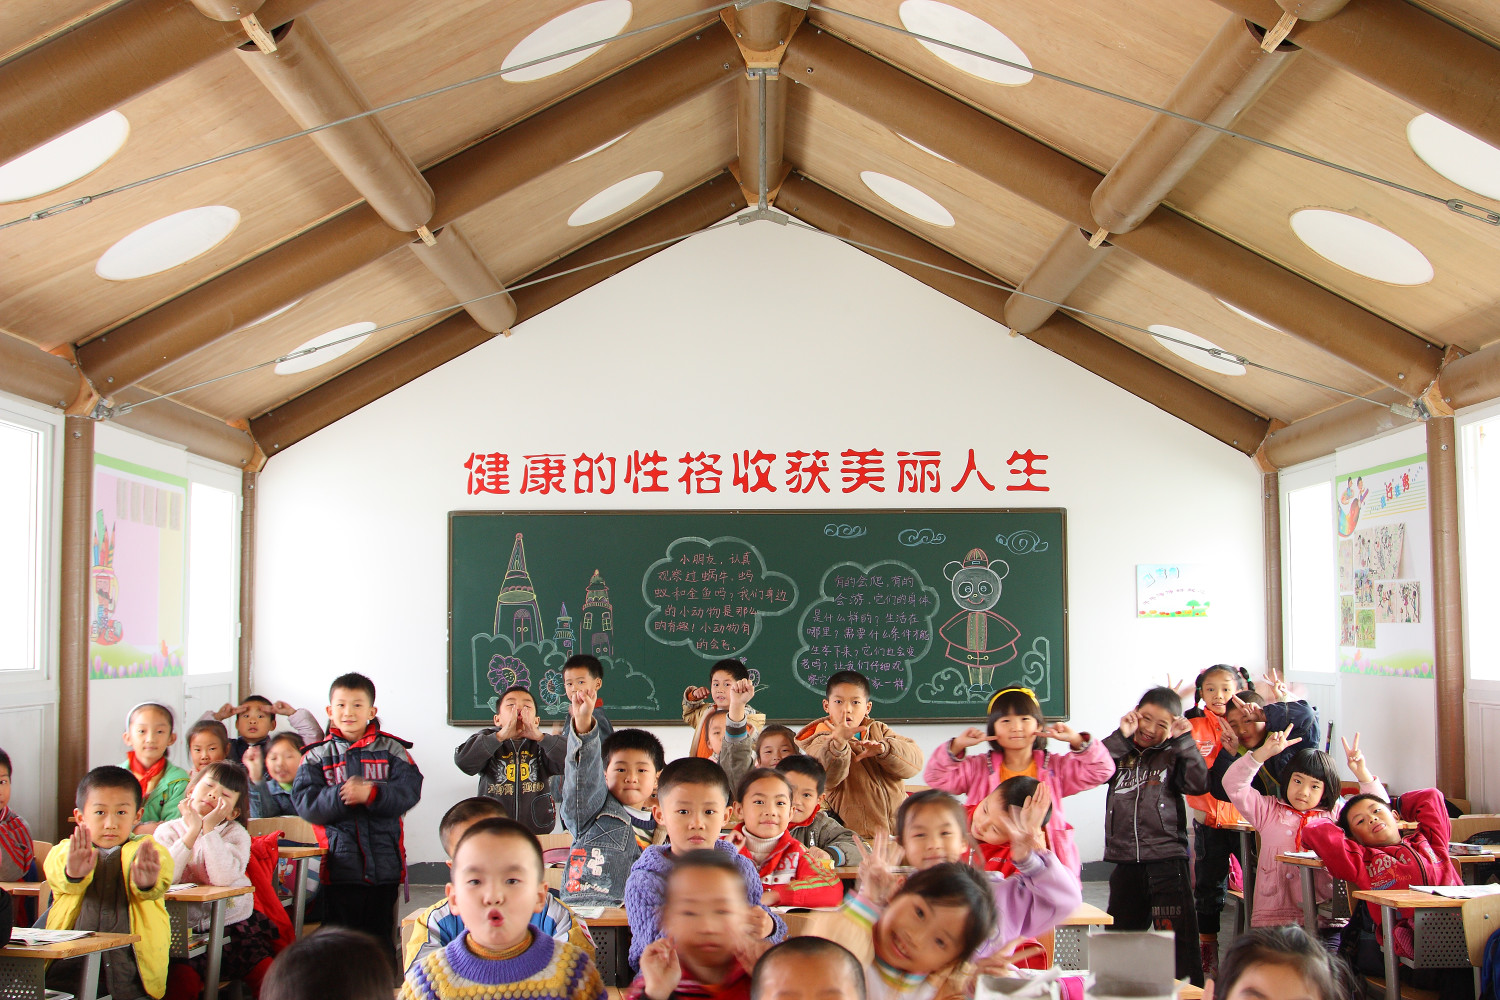 Hualin Temporary Elementary School, Chengdu, China 2008, Photo by Li Jun